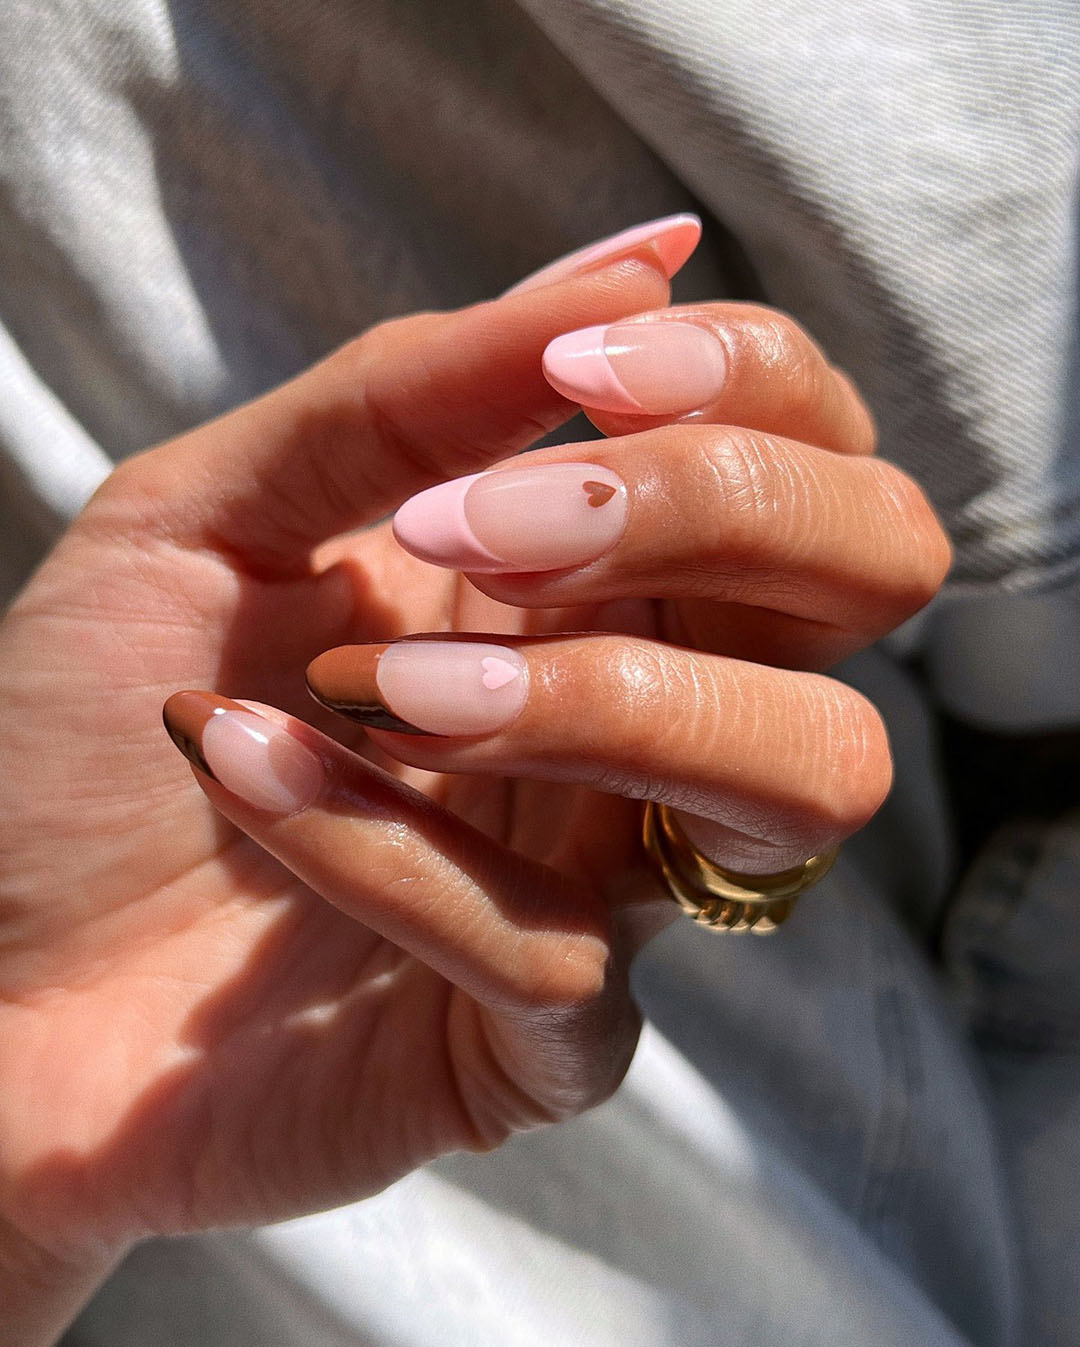 nail art with elegant pink design.